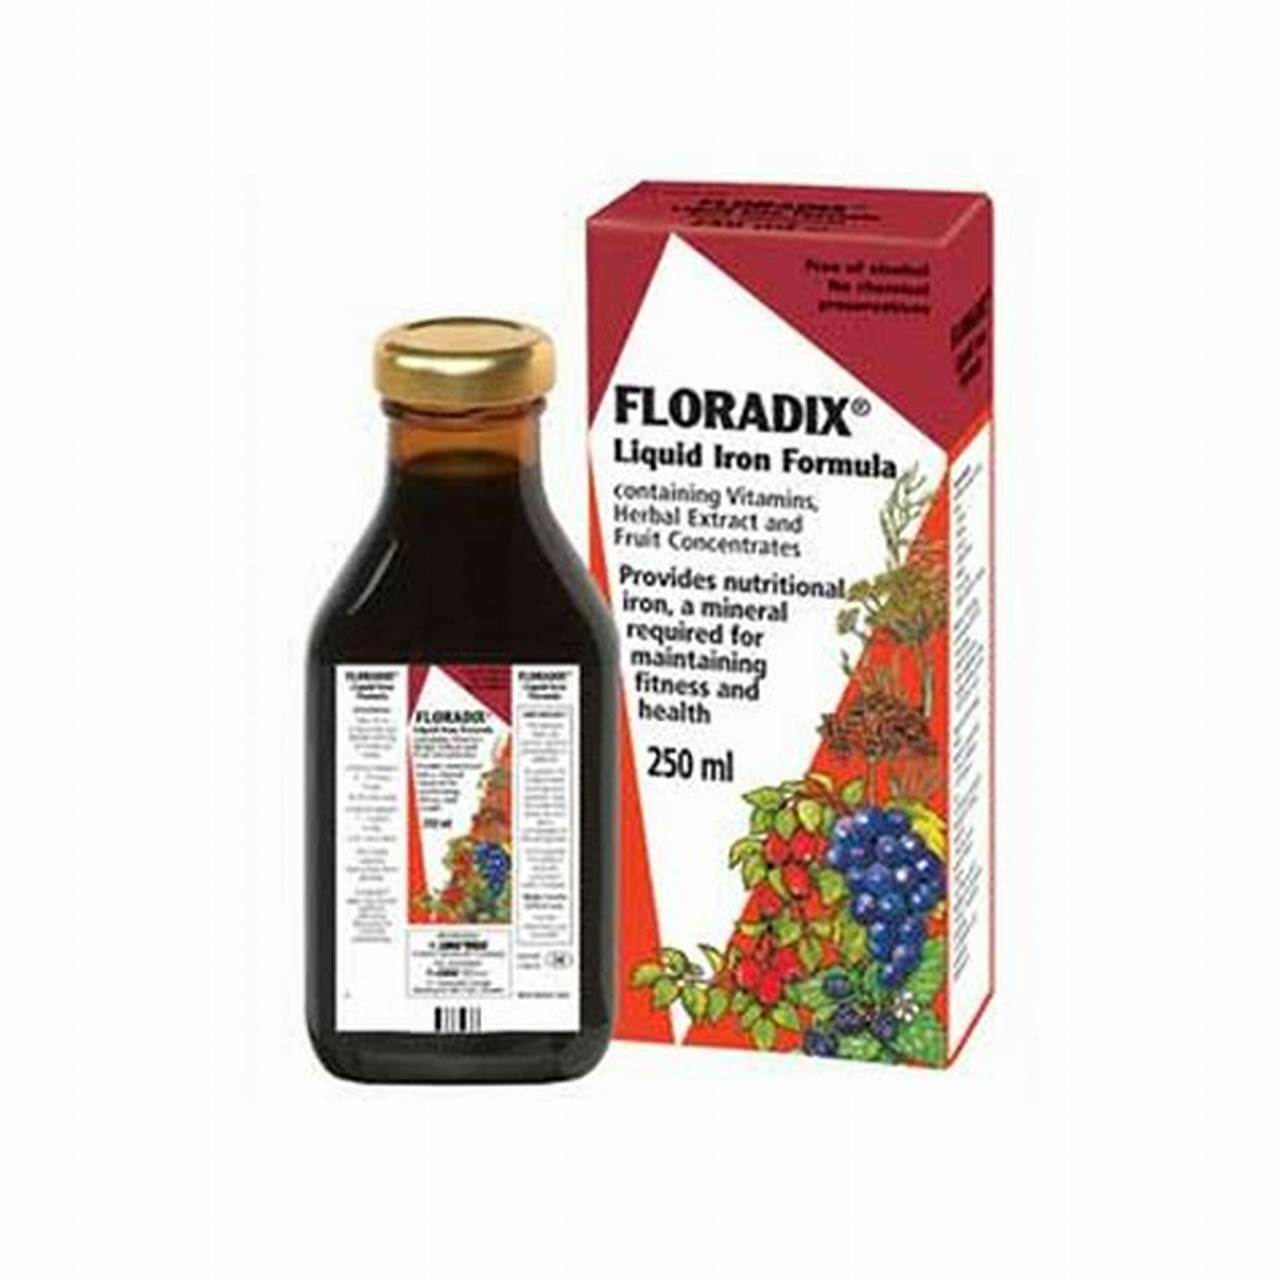 Floradix铁元液 - 27.5.jfif